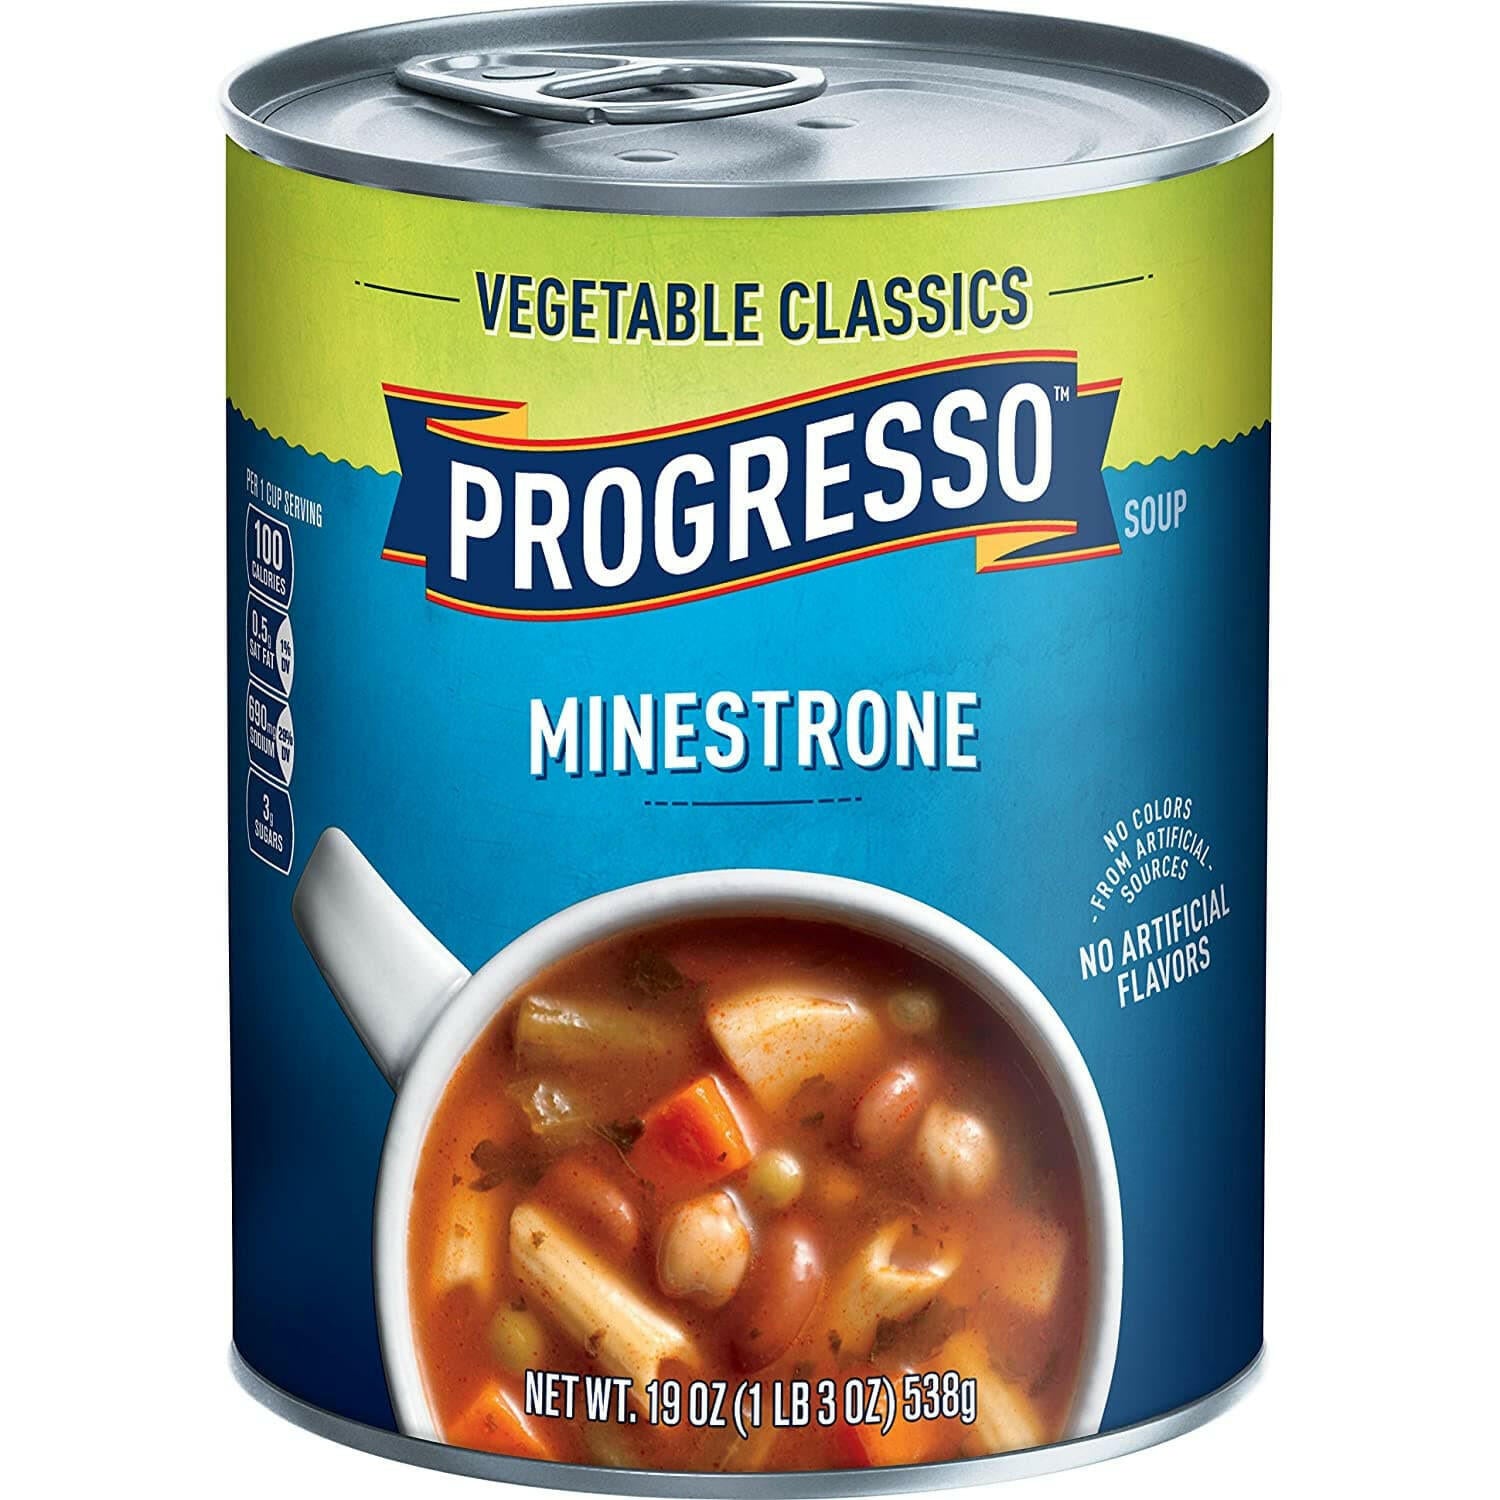 Progresso Vegetable Classics Minestrone Soup 19 oz.